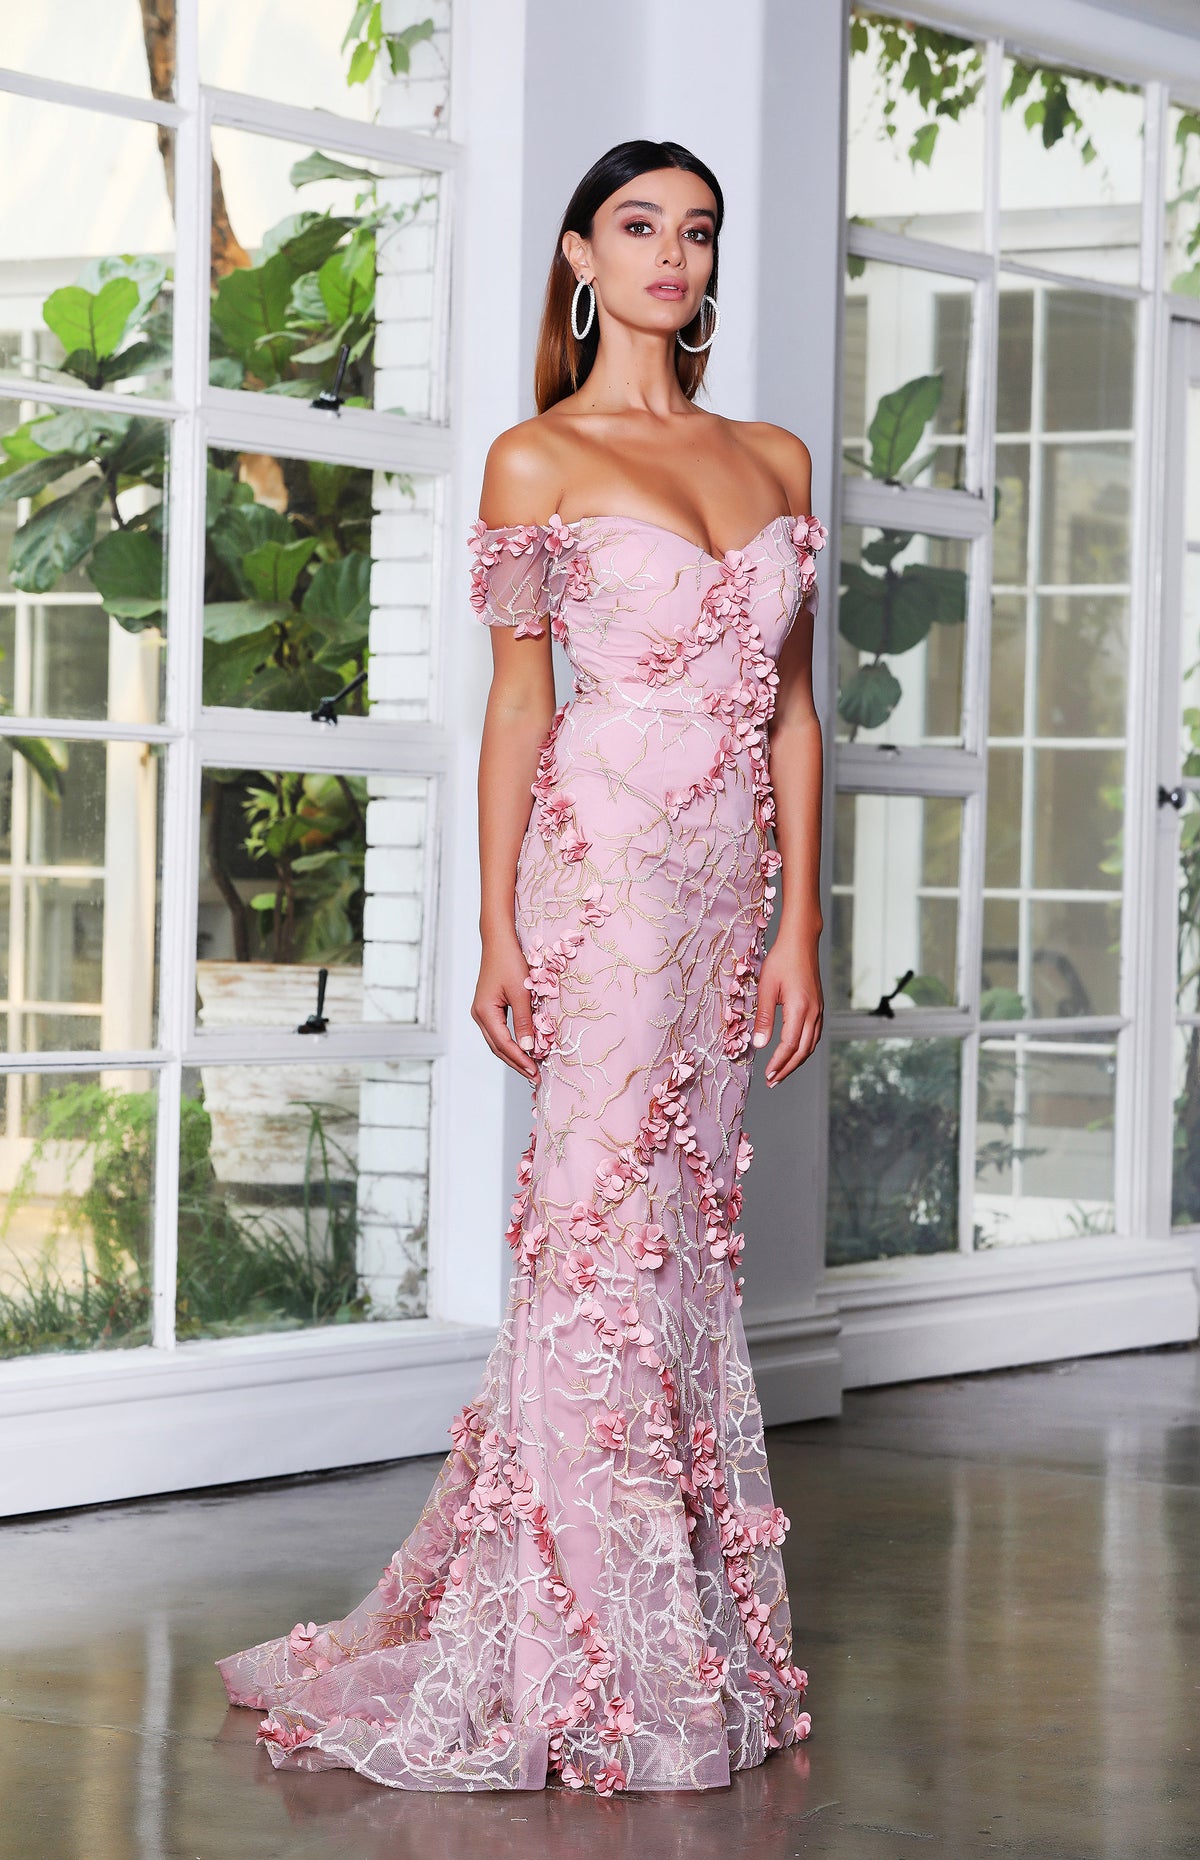 Jadore JX4028 3D Rose Petal Mermaid Evening Gown - A stunning gown with 3D rose petal embellishments and off-the-shoulder neckline.